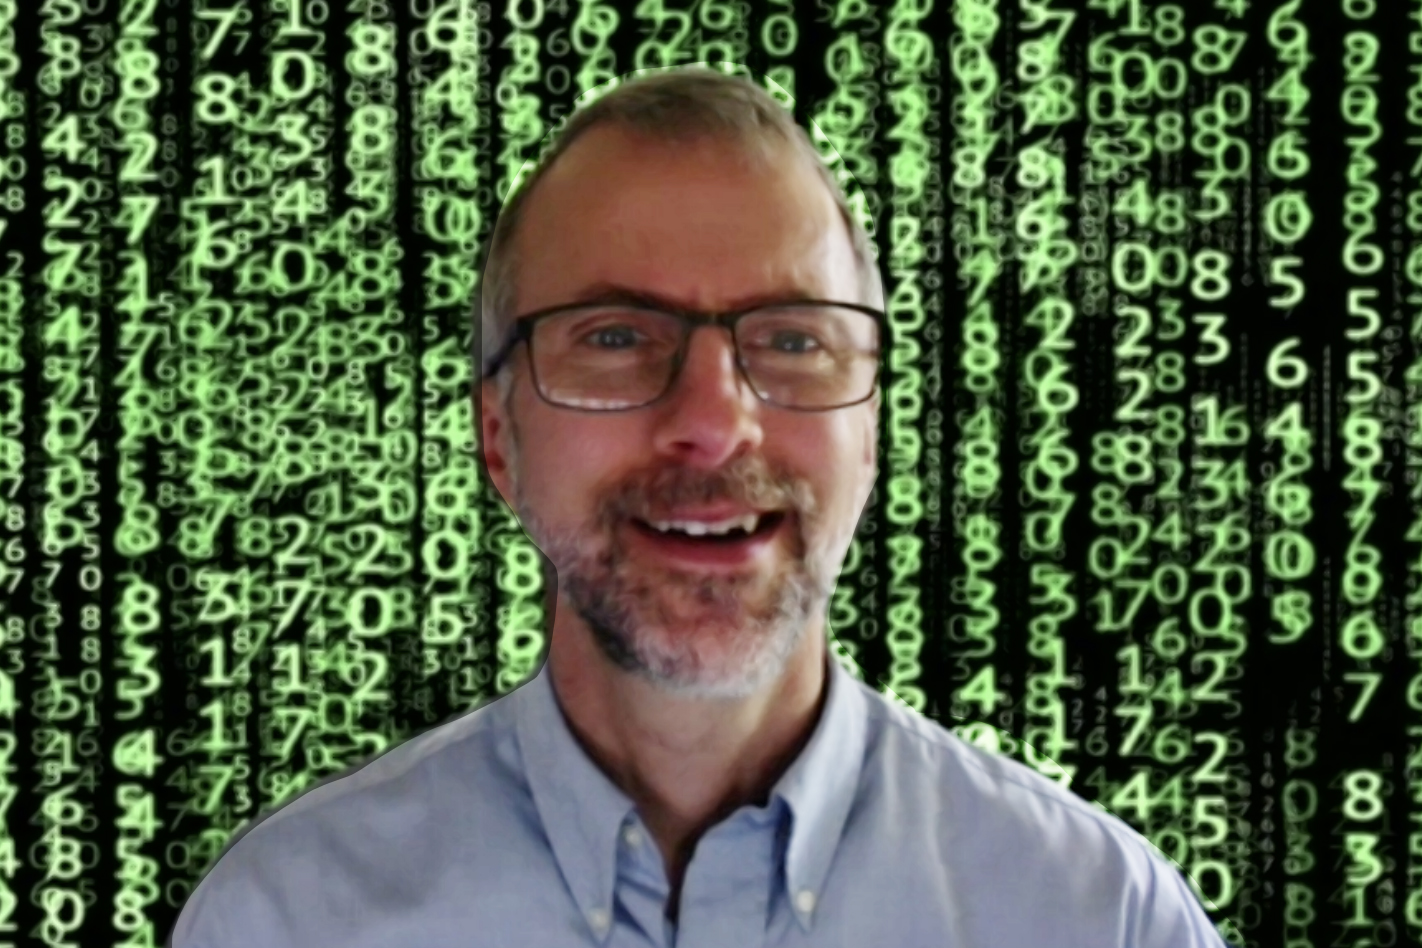 Fessler in front of Matrix code background